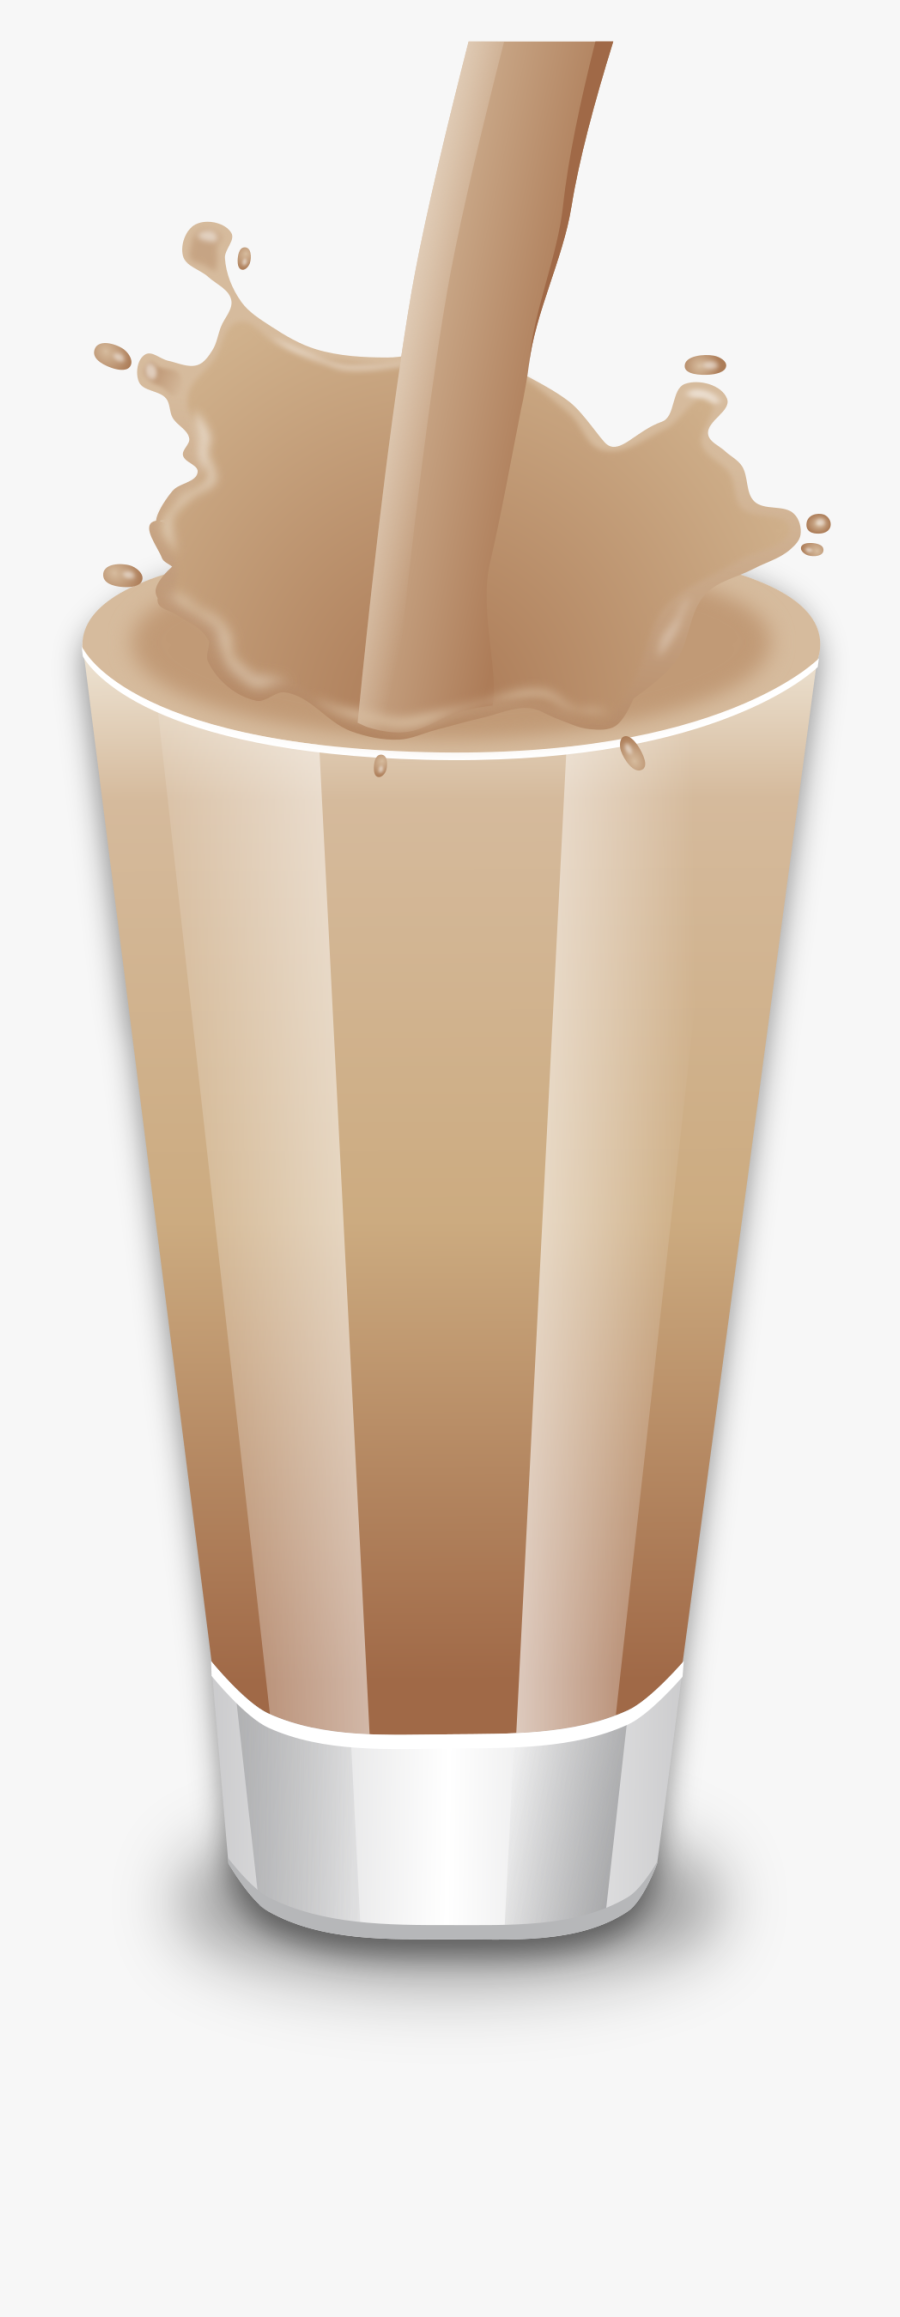 Glass Clipart Chocolate Milk - Clip Art, Transparent Clipart